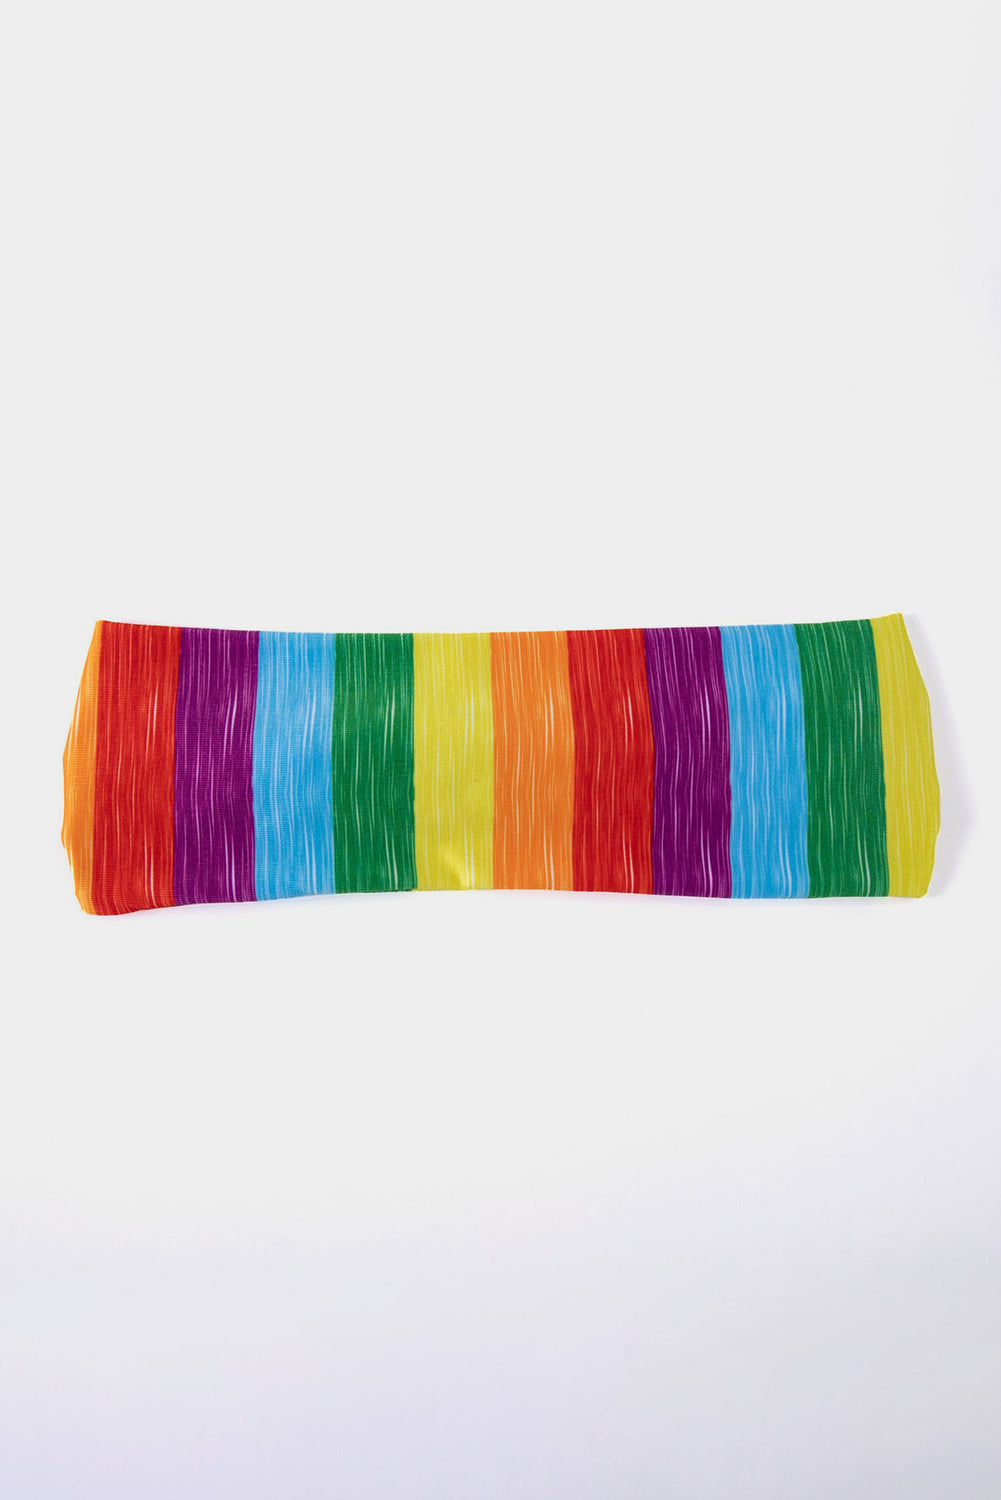 BH042004-1022, Multicolor Rainbow Sport Yoga Wide Headband Hair Accessories Pride Accessories Decor